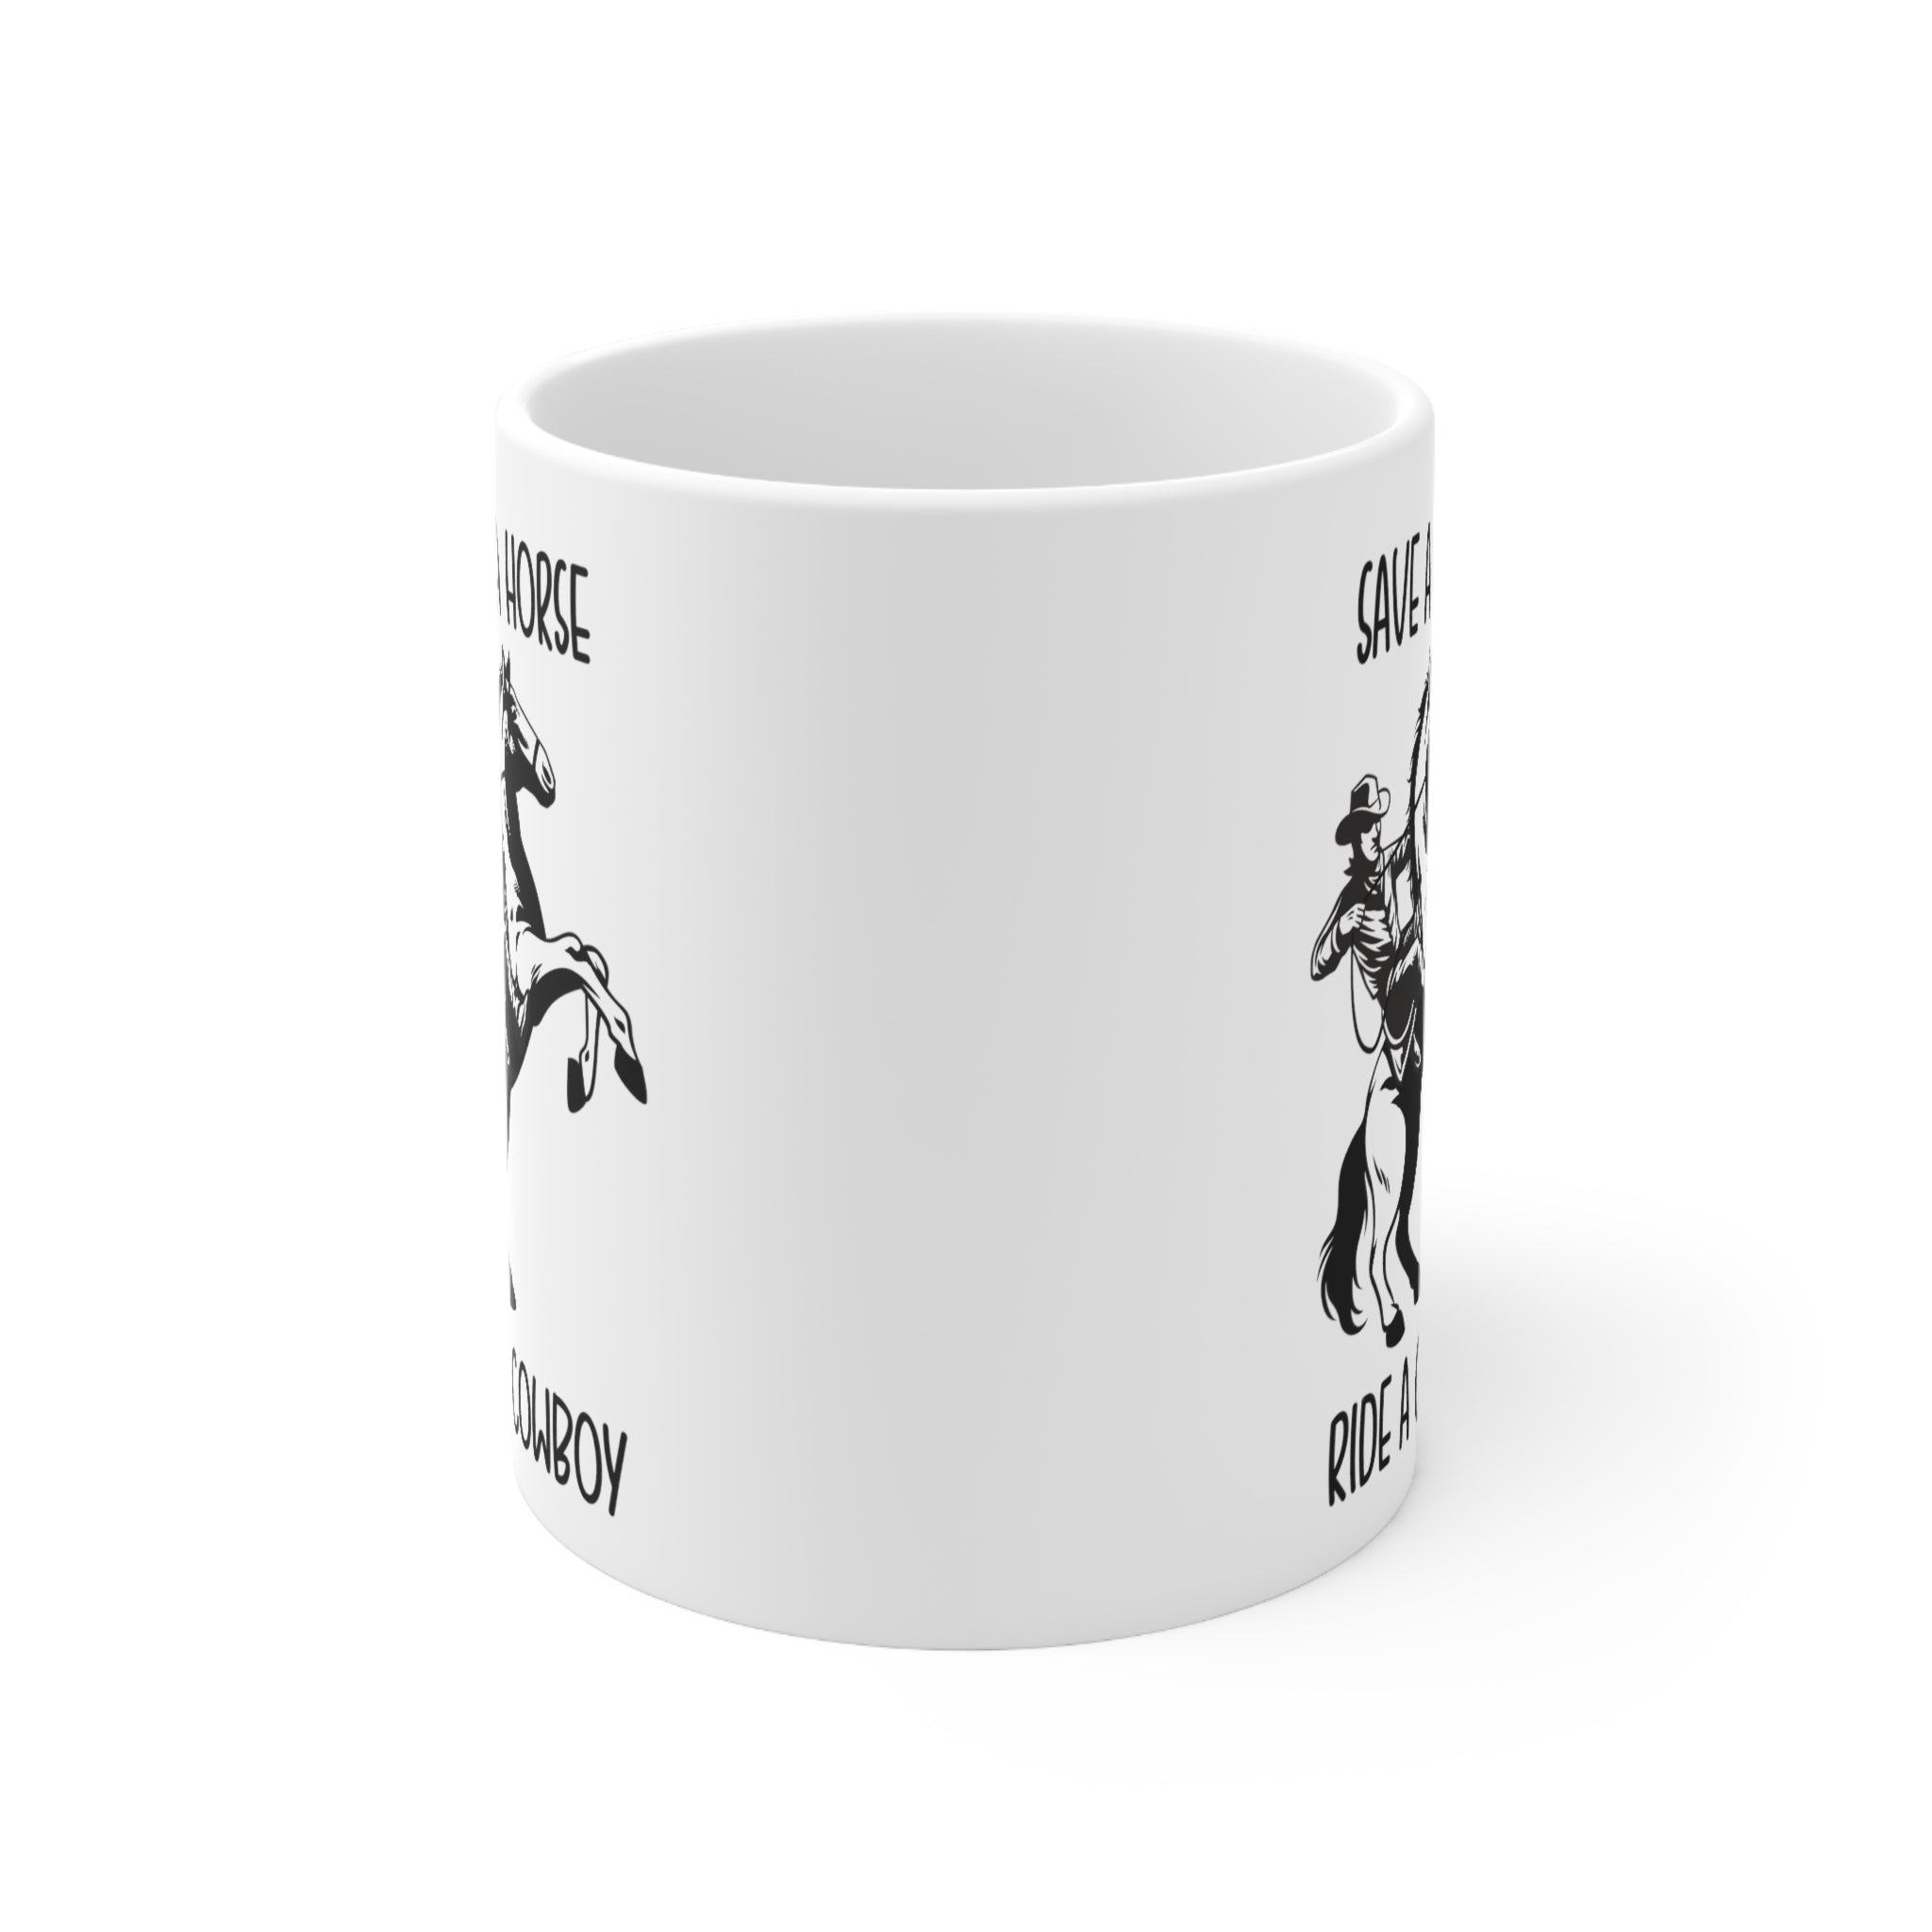 Save A Horse Ride A Cowboy Ceramic Mug 11 ounce Coffee Mug Tea Cup Gift for Cowboy Country Boy